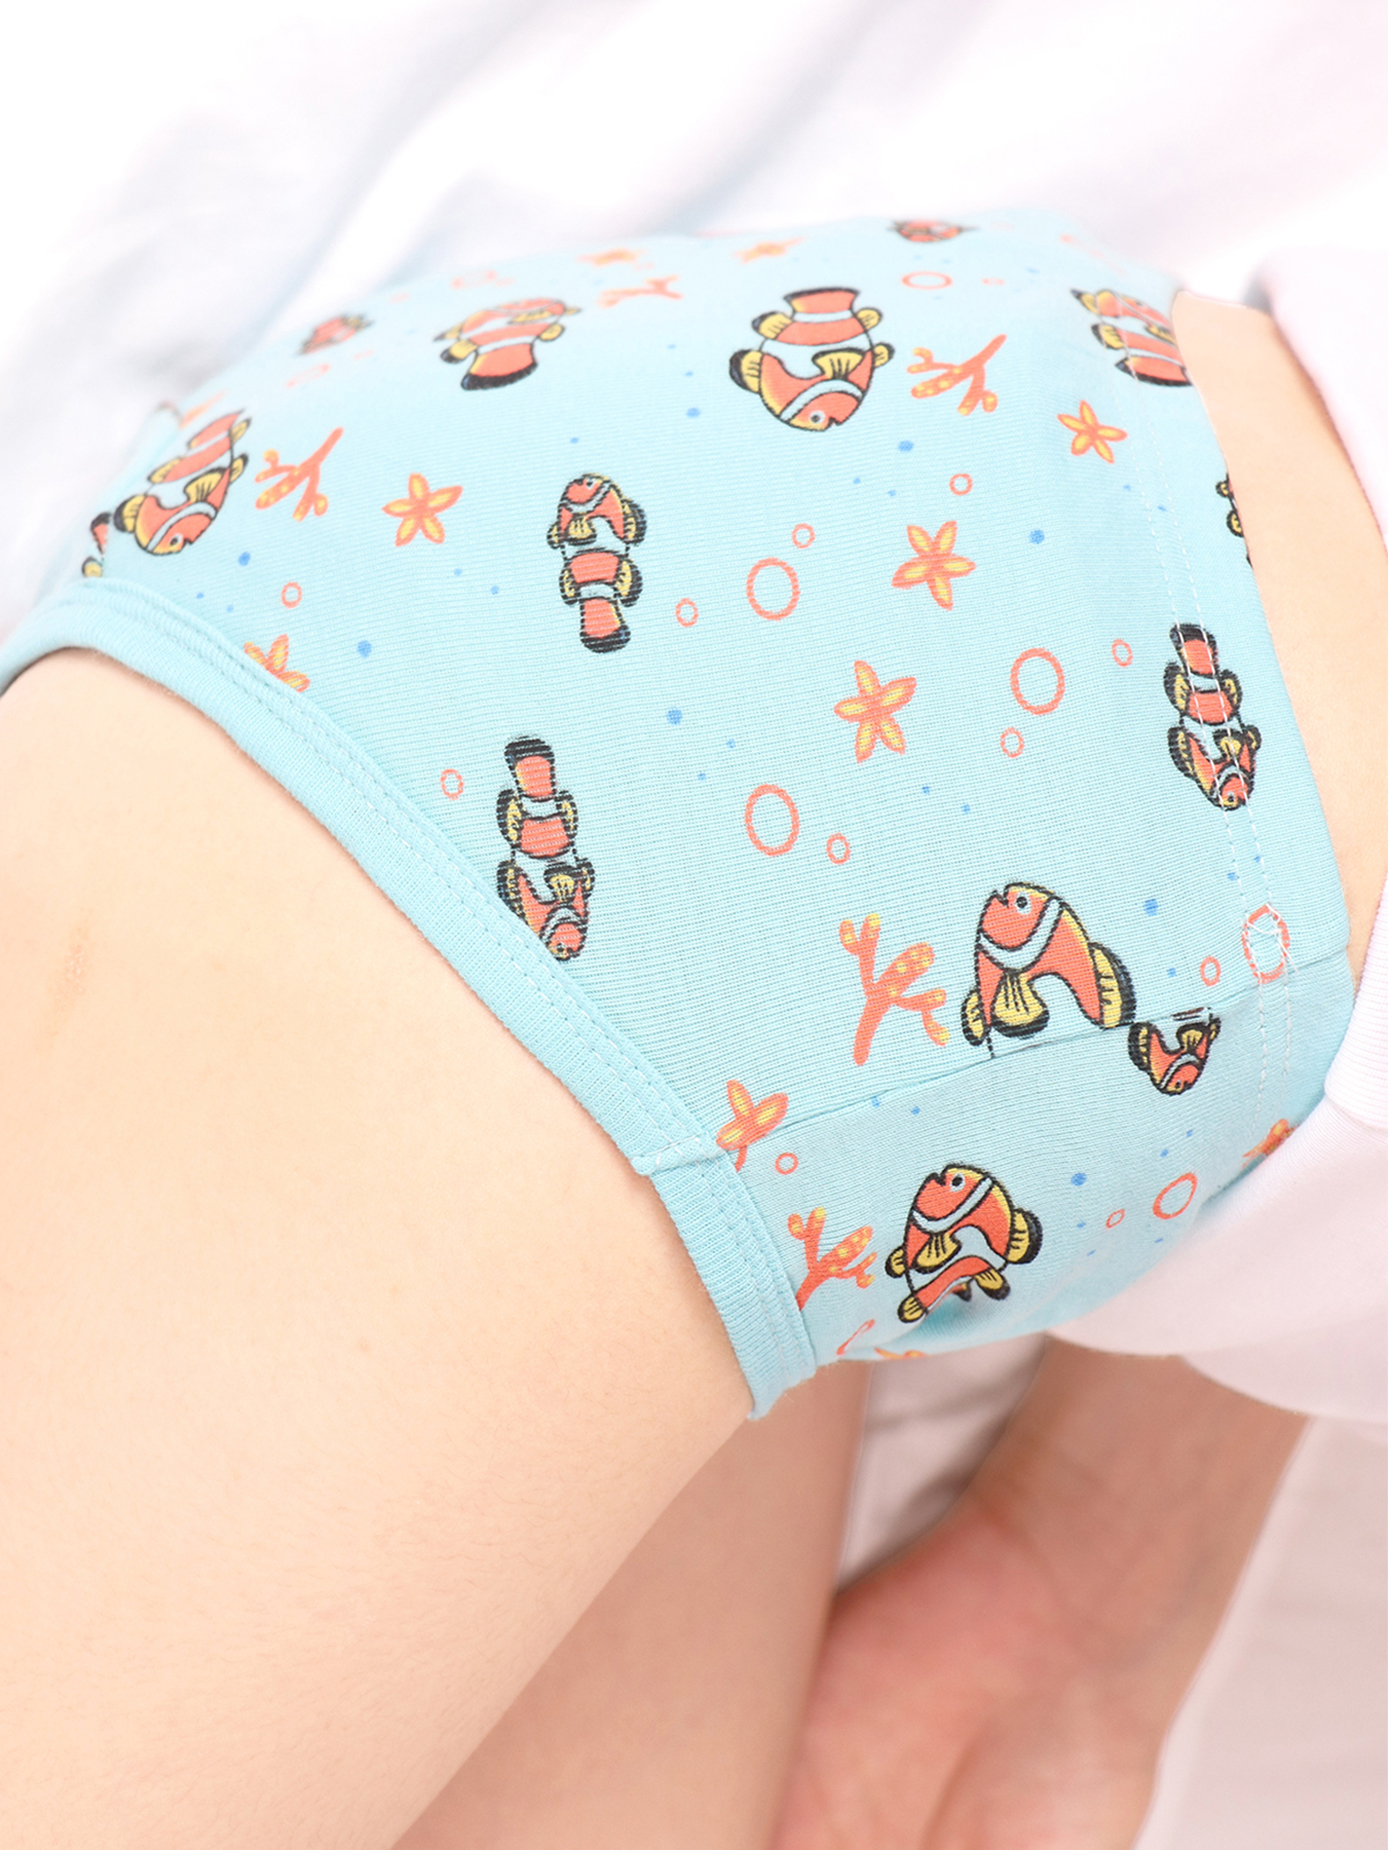 6Pcs/Set Girls Baby Underwear Soft Cotton Panties Kids Underpants Shorts  Briefs